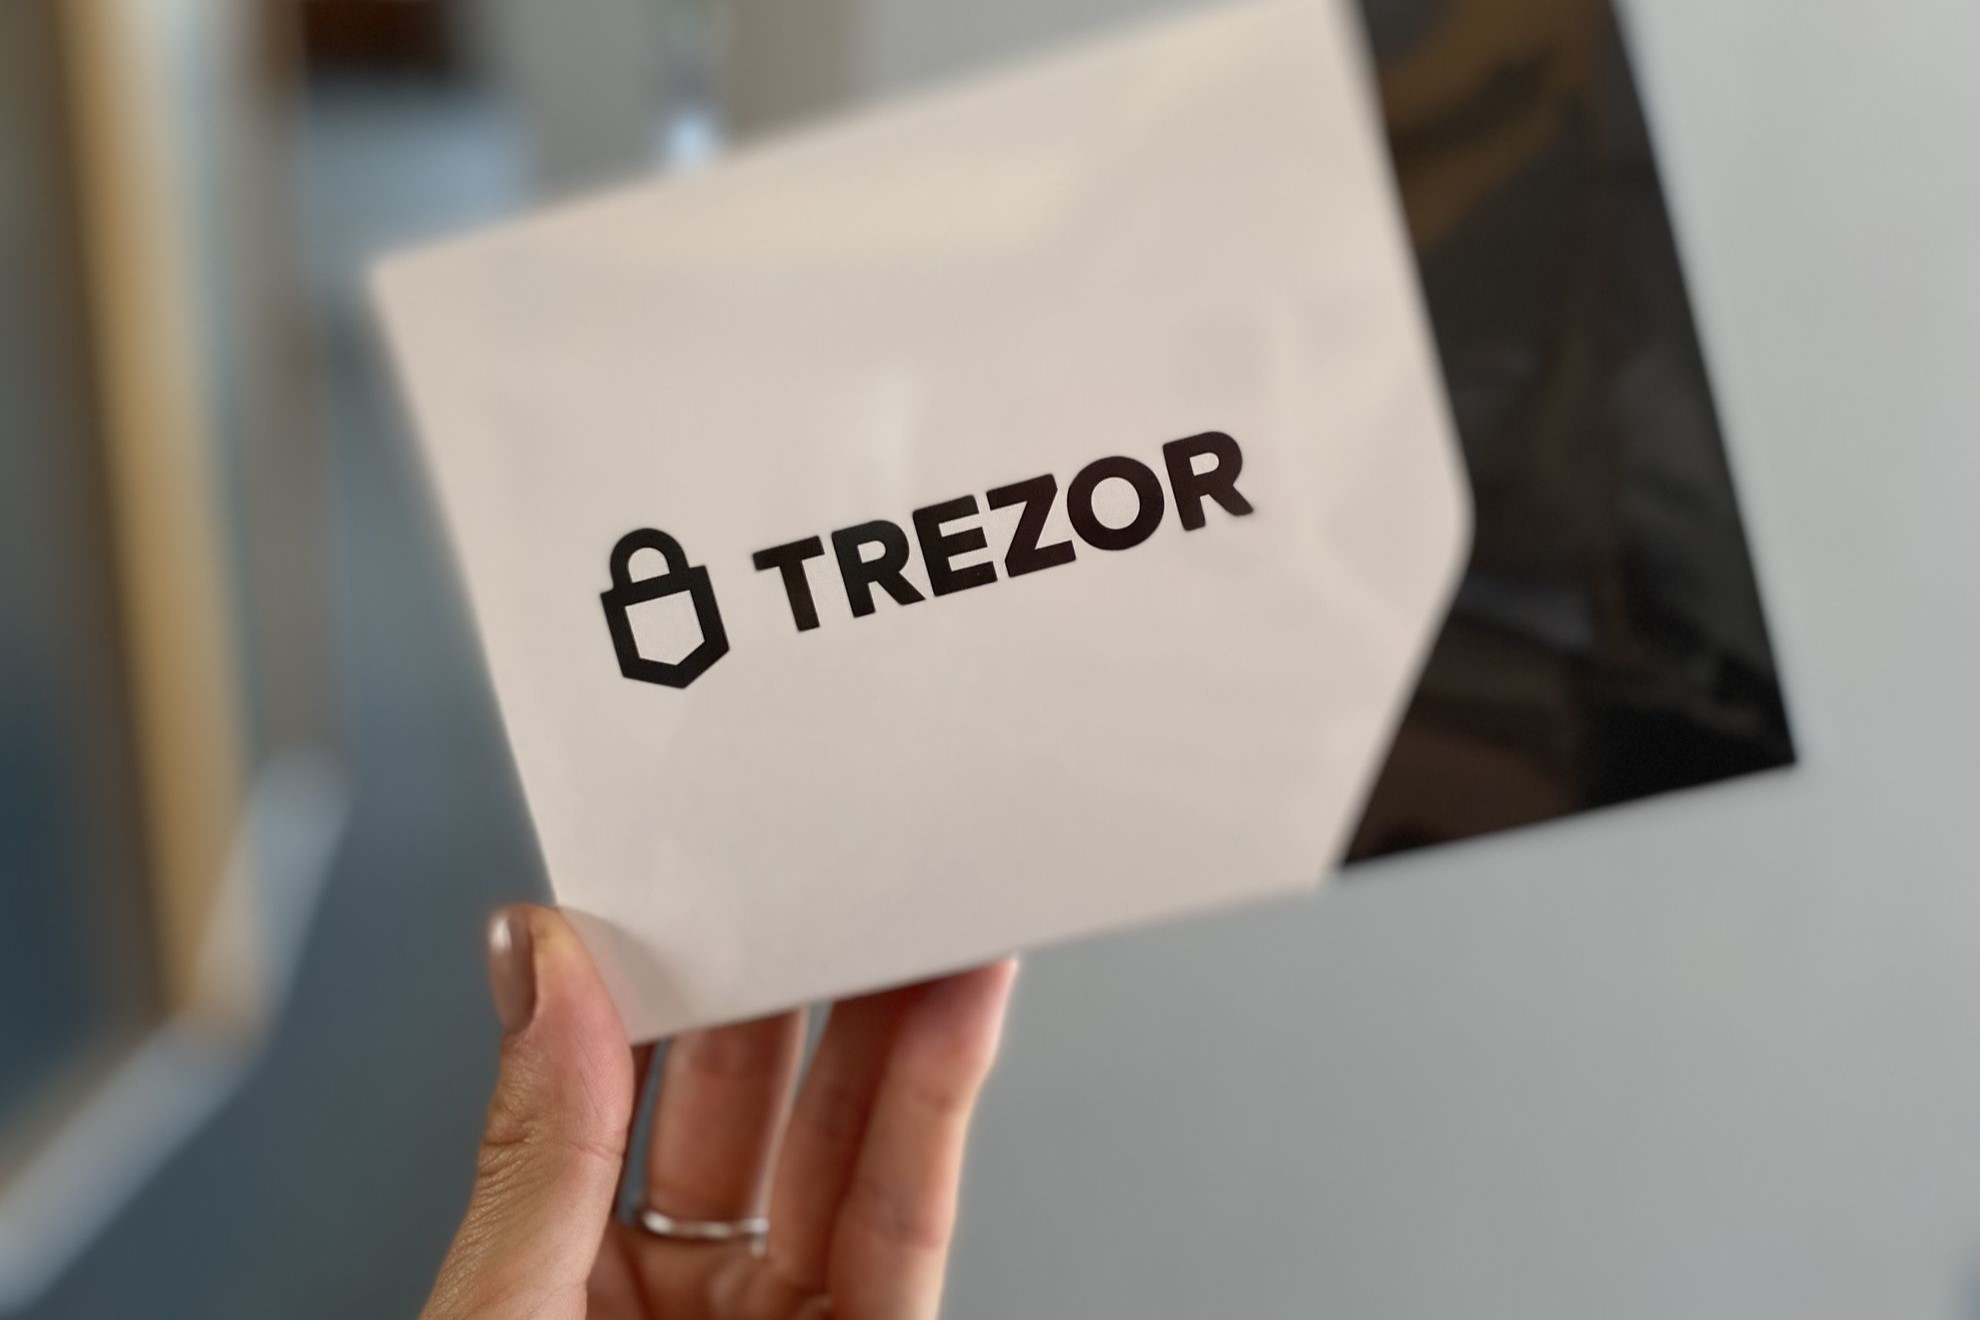 What Company Makes Trezor